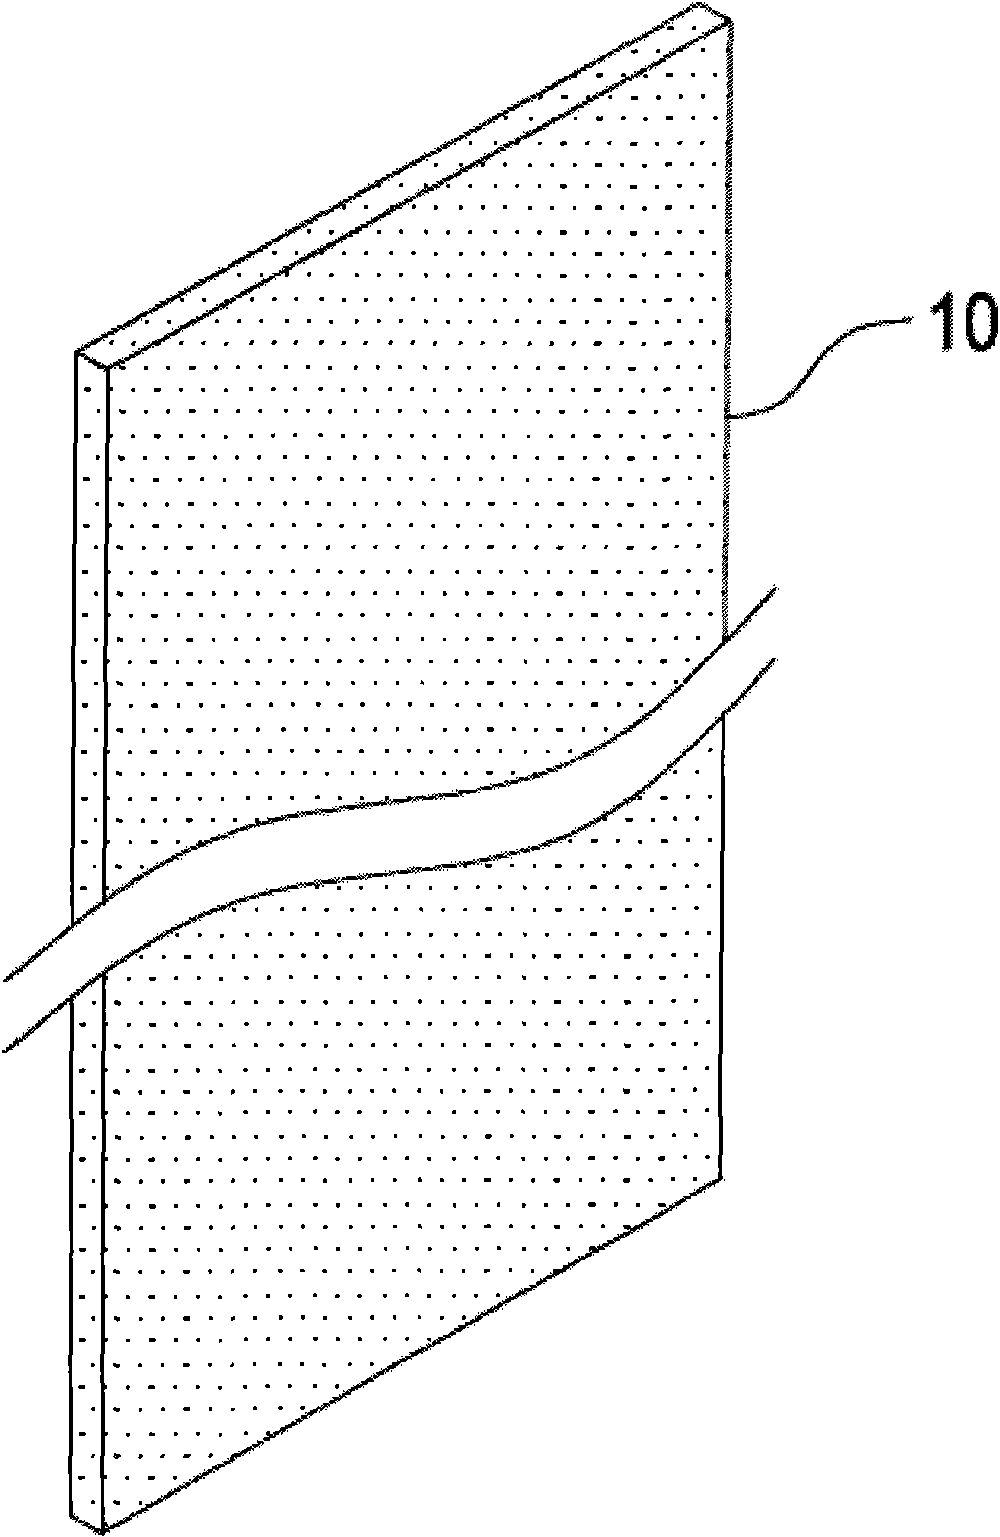 Method for producing environmental-friendly wallboard